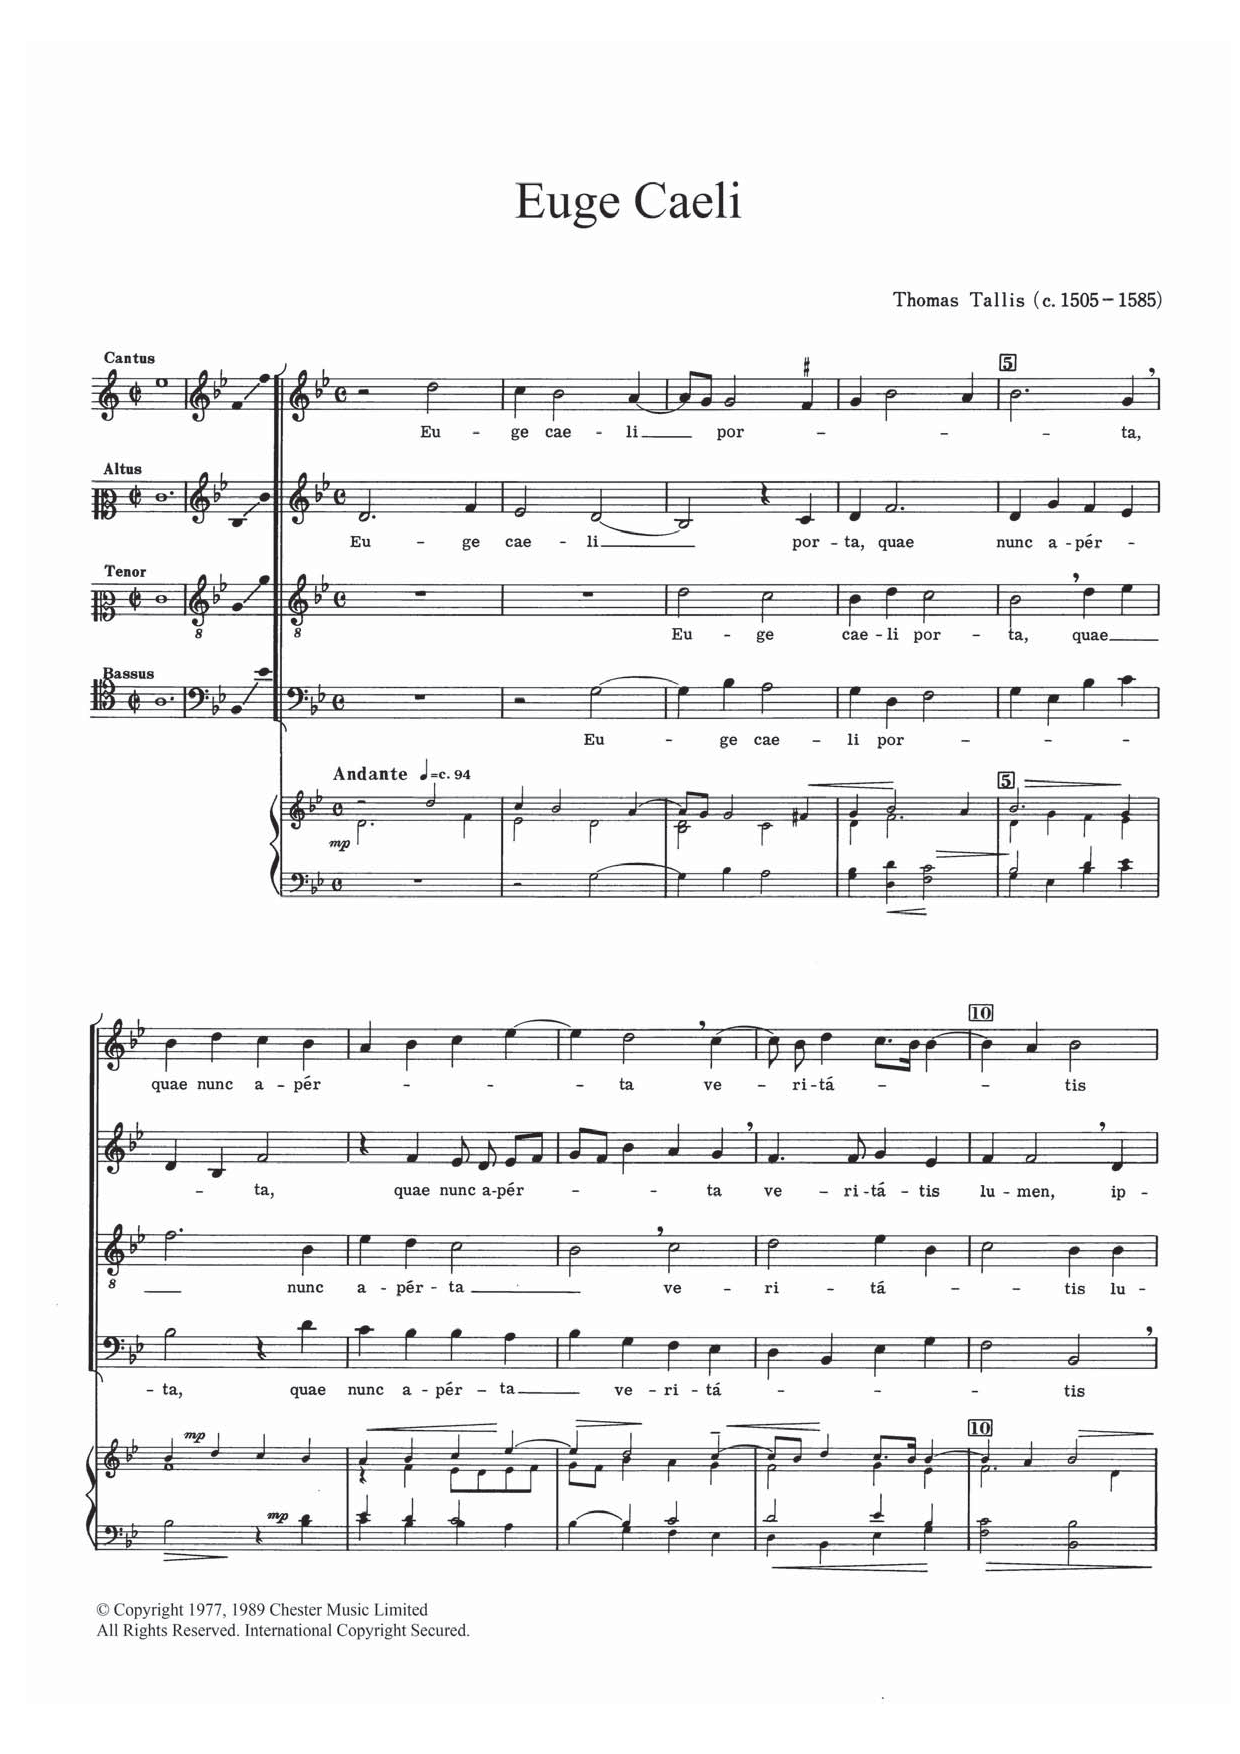 Thomas Tallis Euge Caeli Sheet Music Notes & Chords for SATB - Download or Print PDF